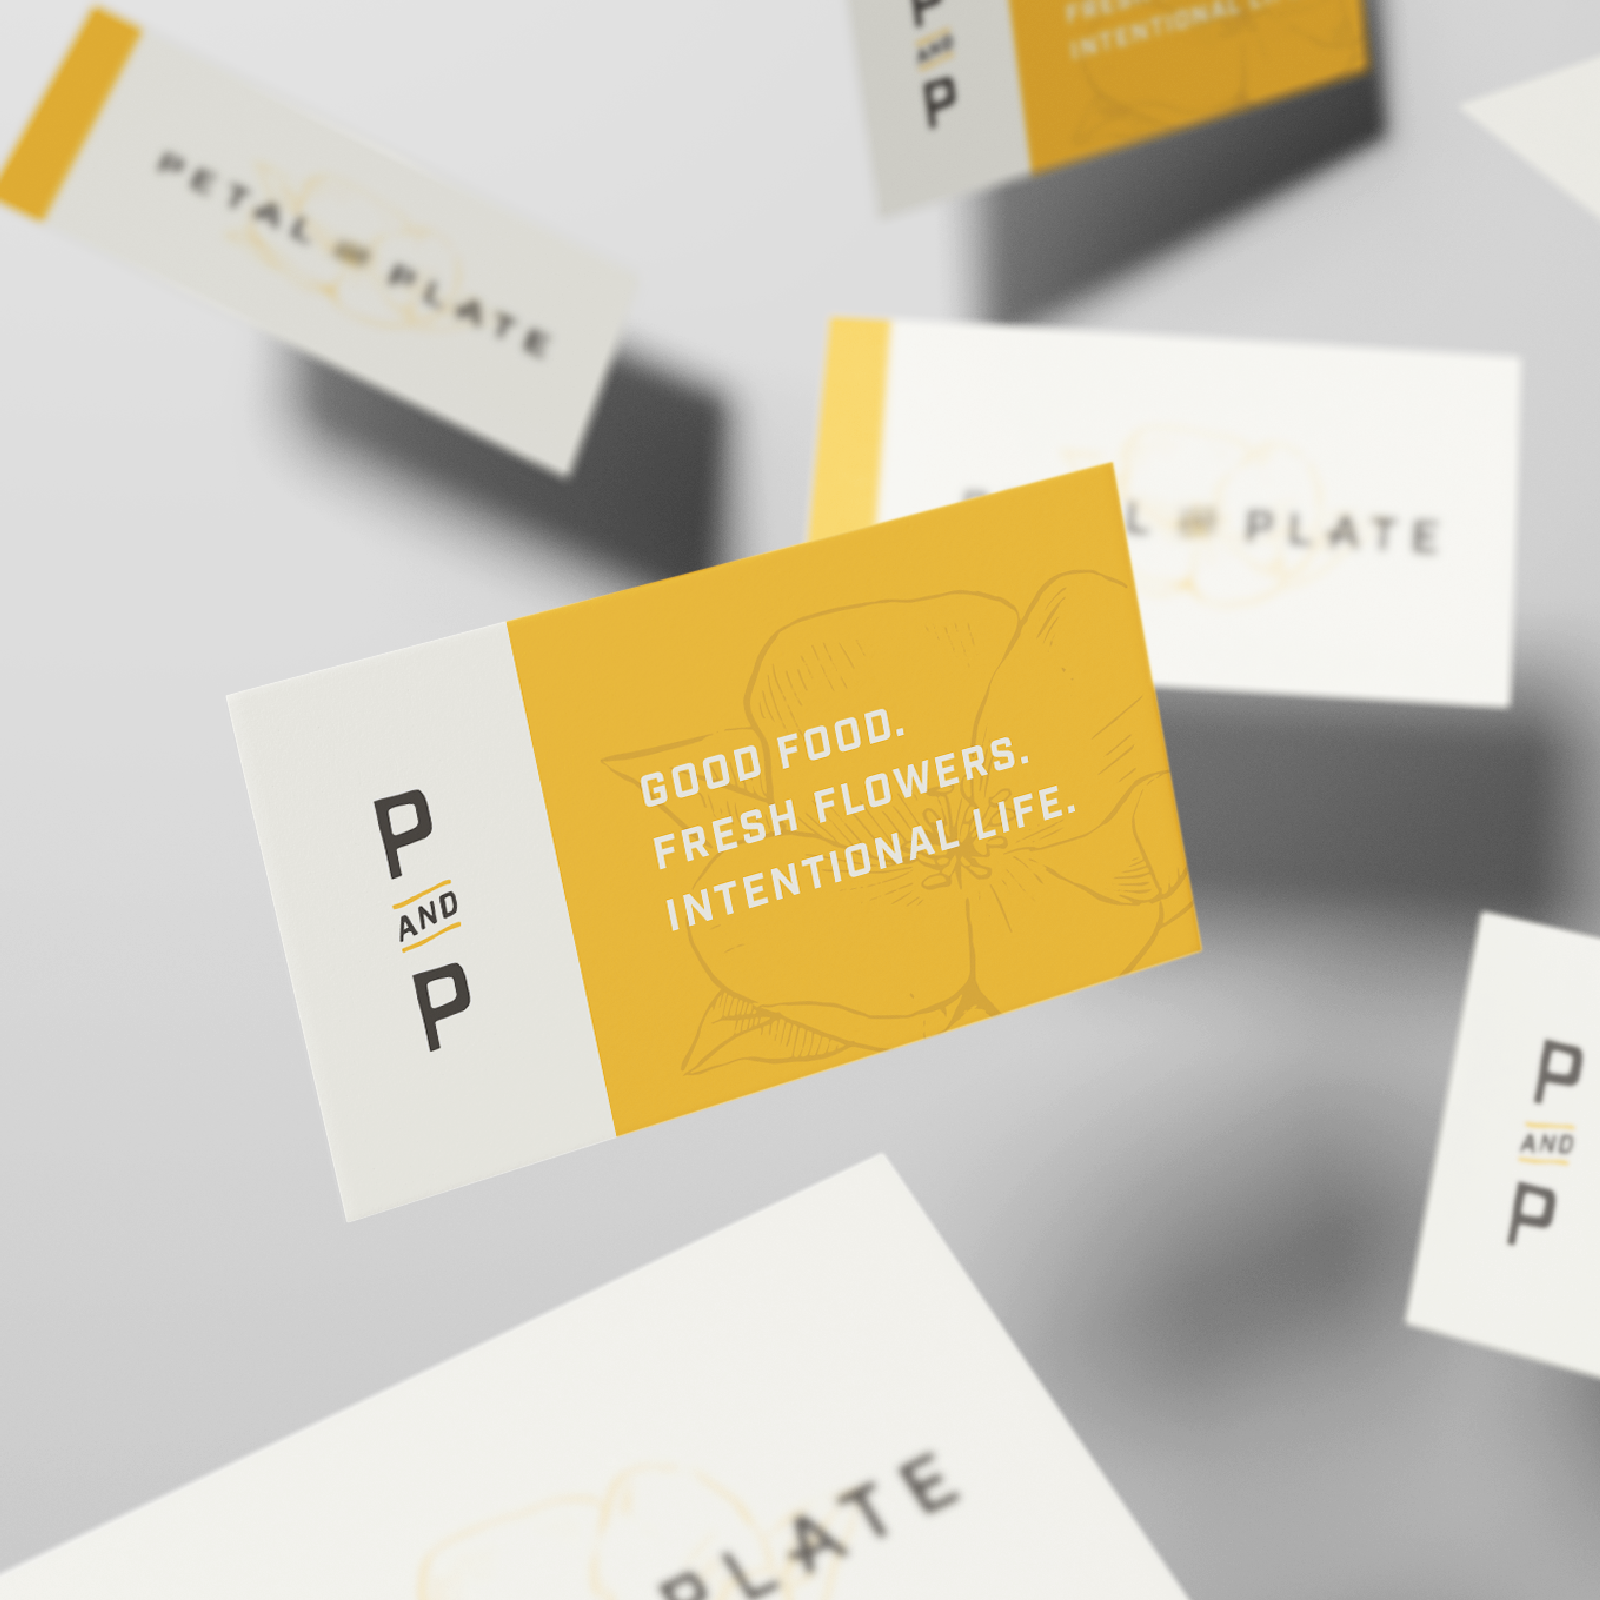 Petal and Plate Brand Development and Logo Design